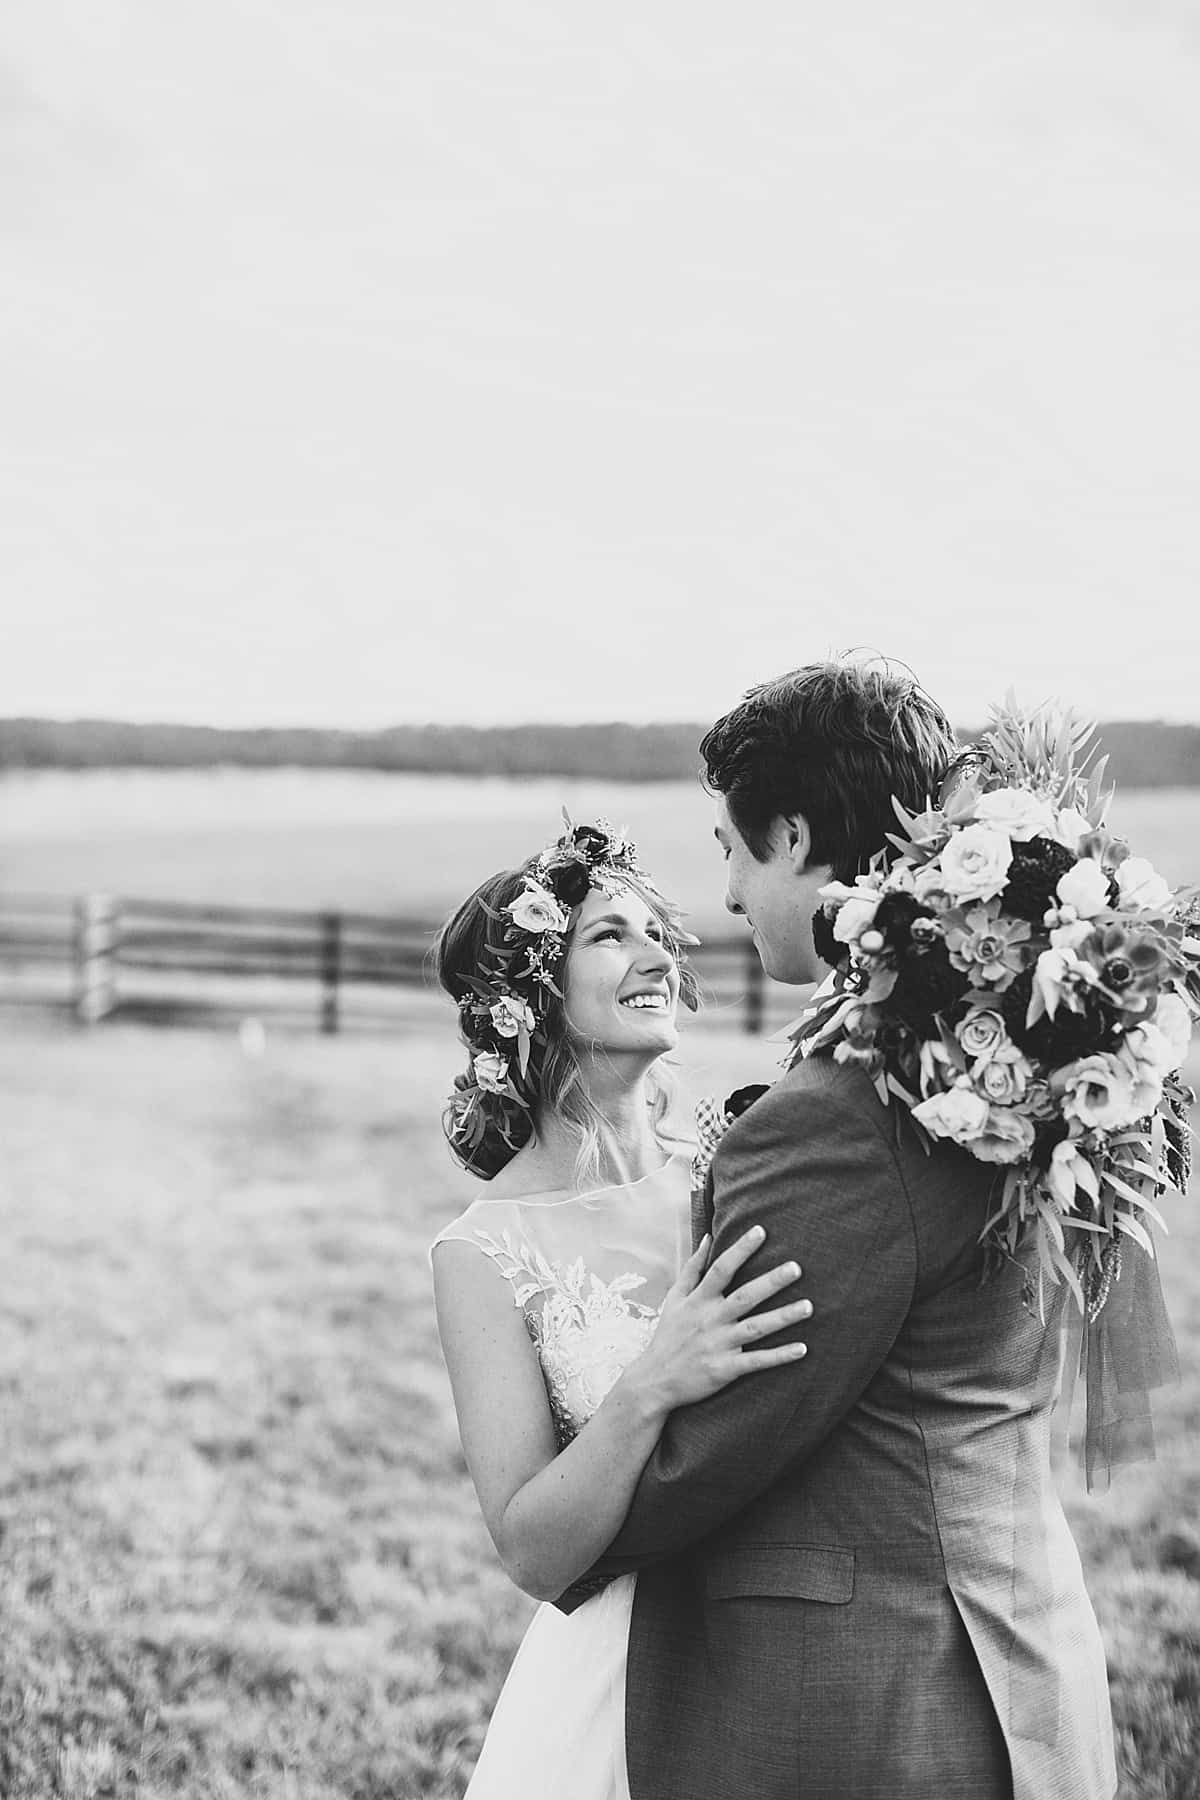 Bend Central Oregon Wedding and Portrait Photographer